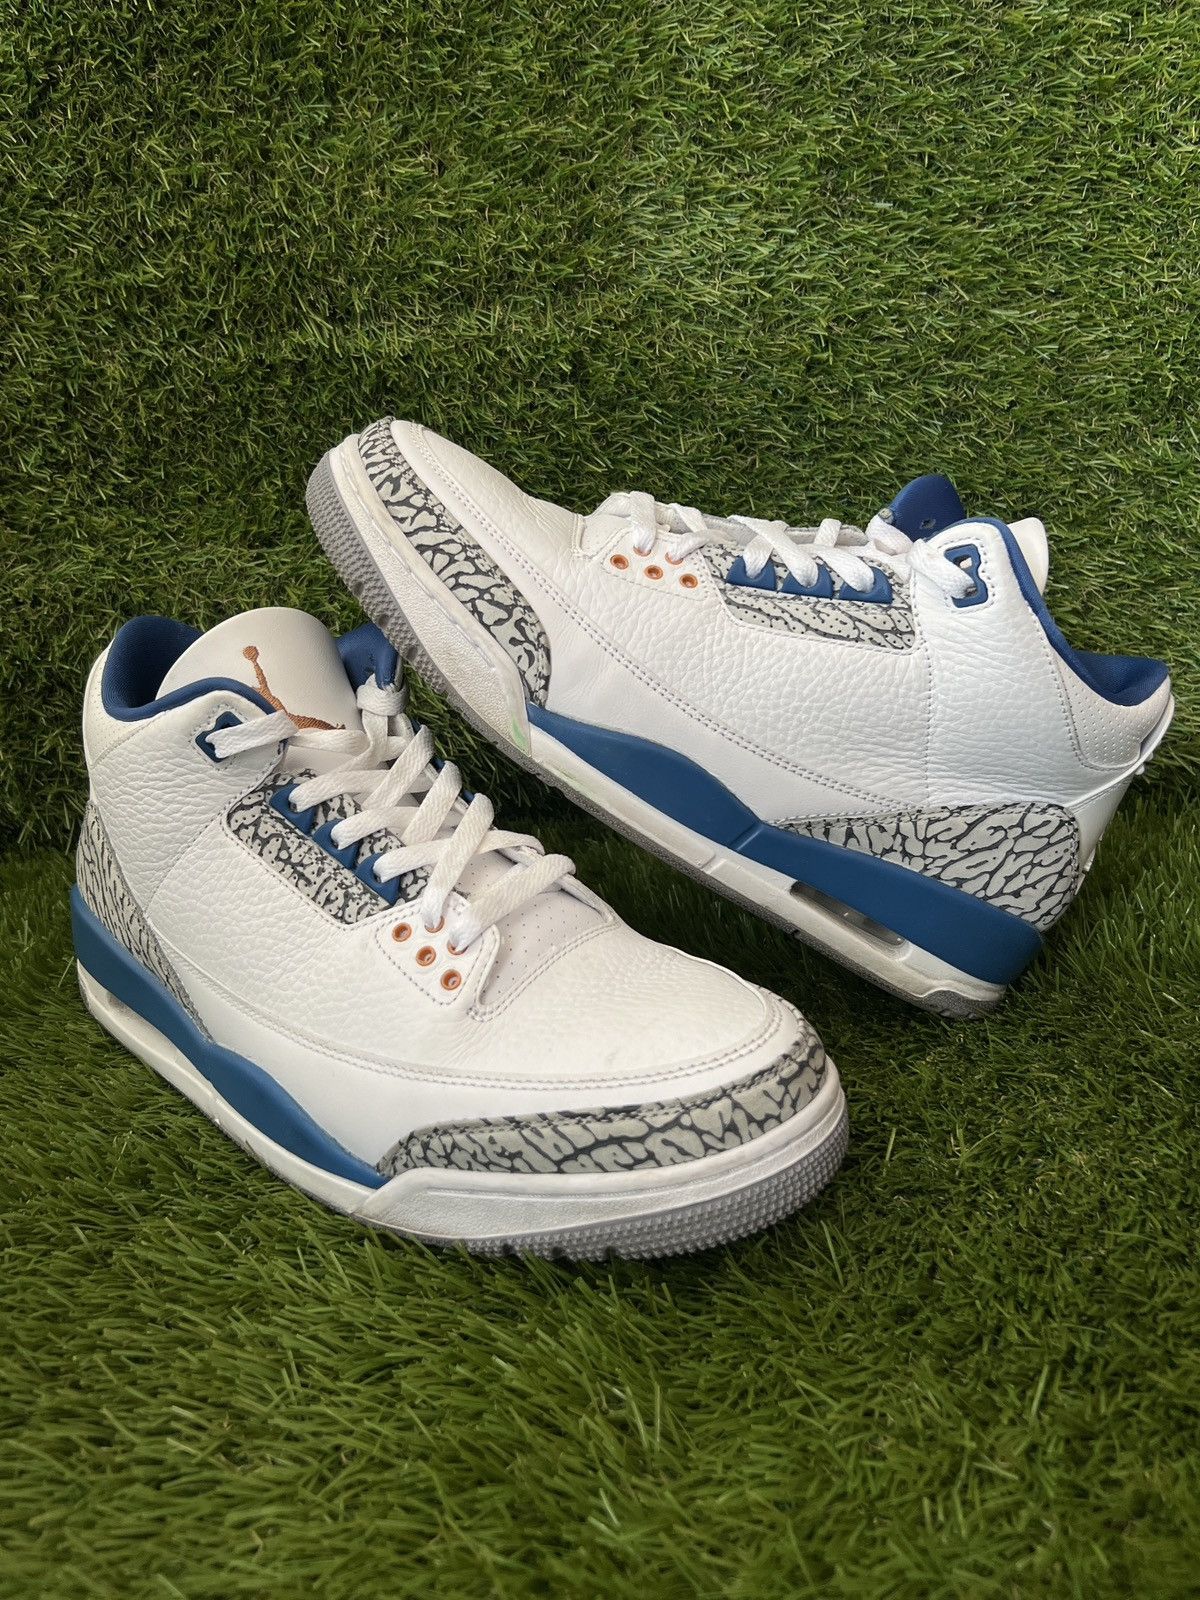 Pre-owned Jordan Nike Jordan 3 Retro Mid Washington Wizards Shoes In Blue